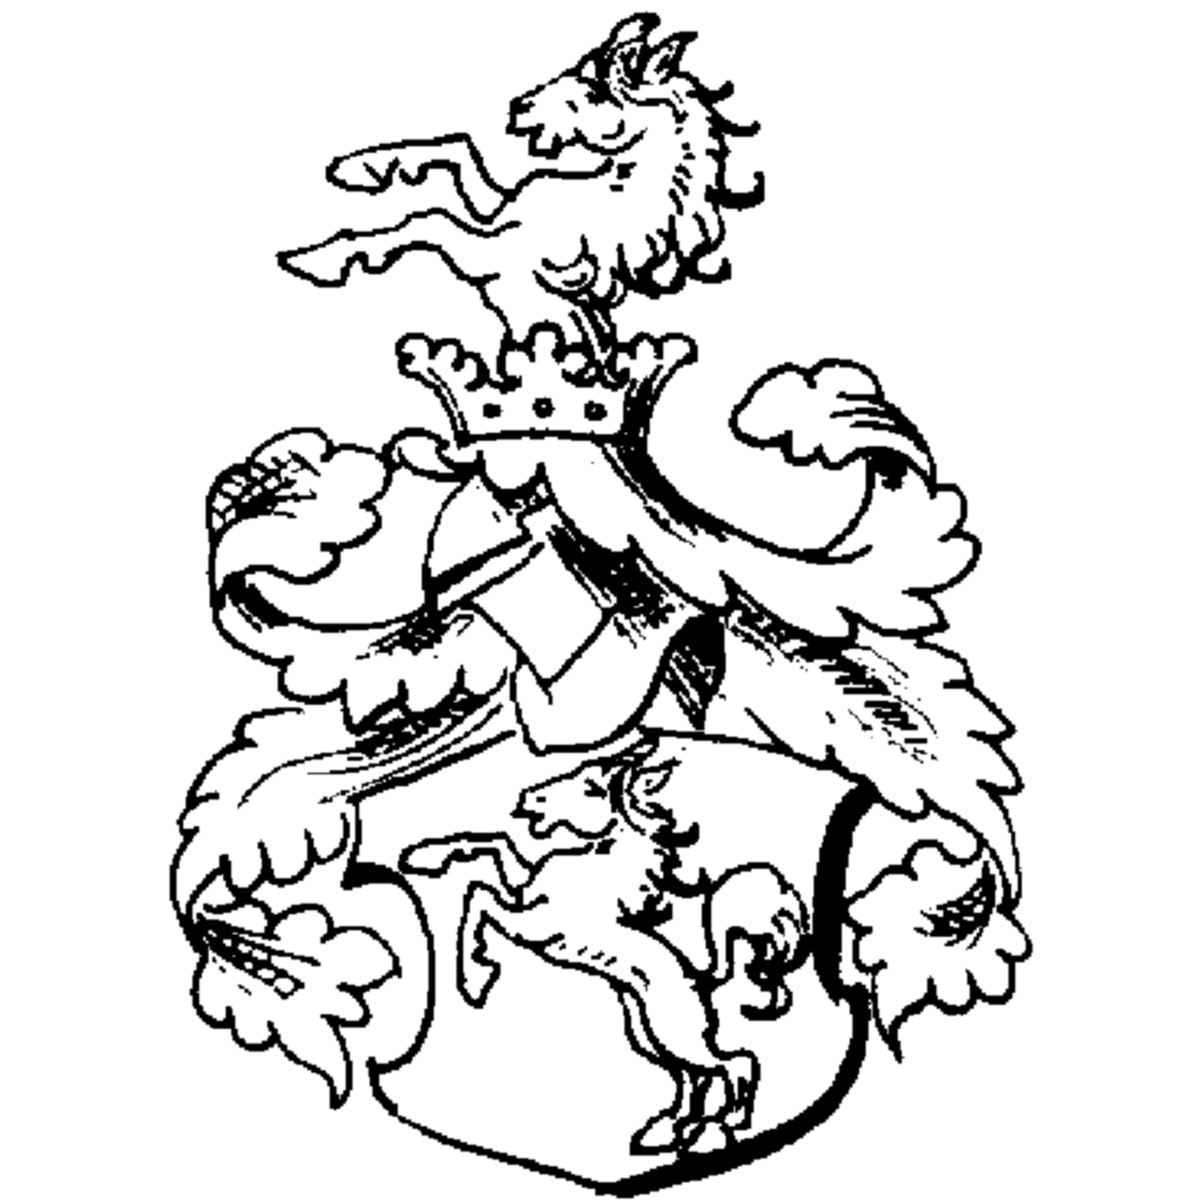 Wappen der Familie Sternebecke